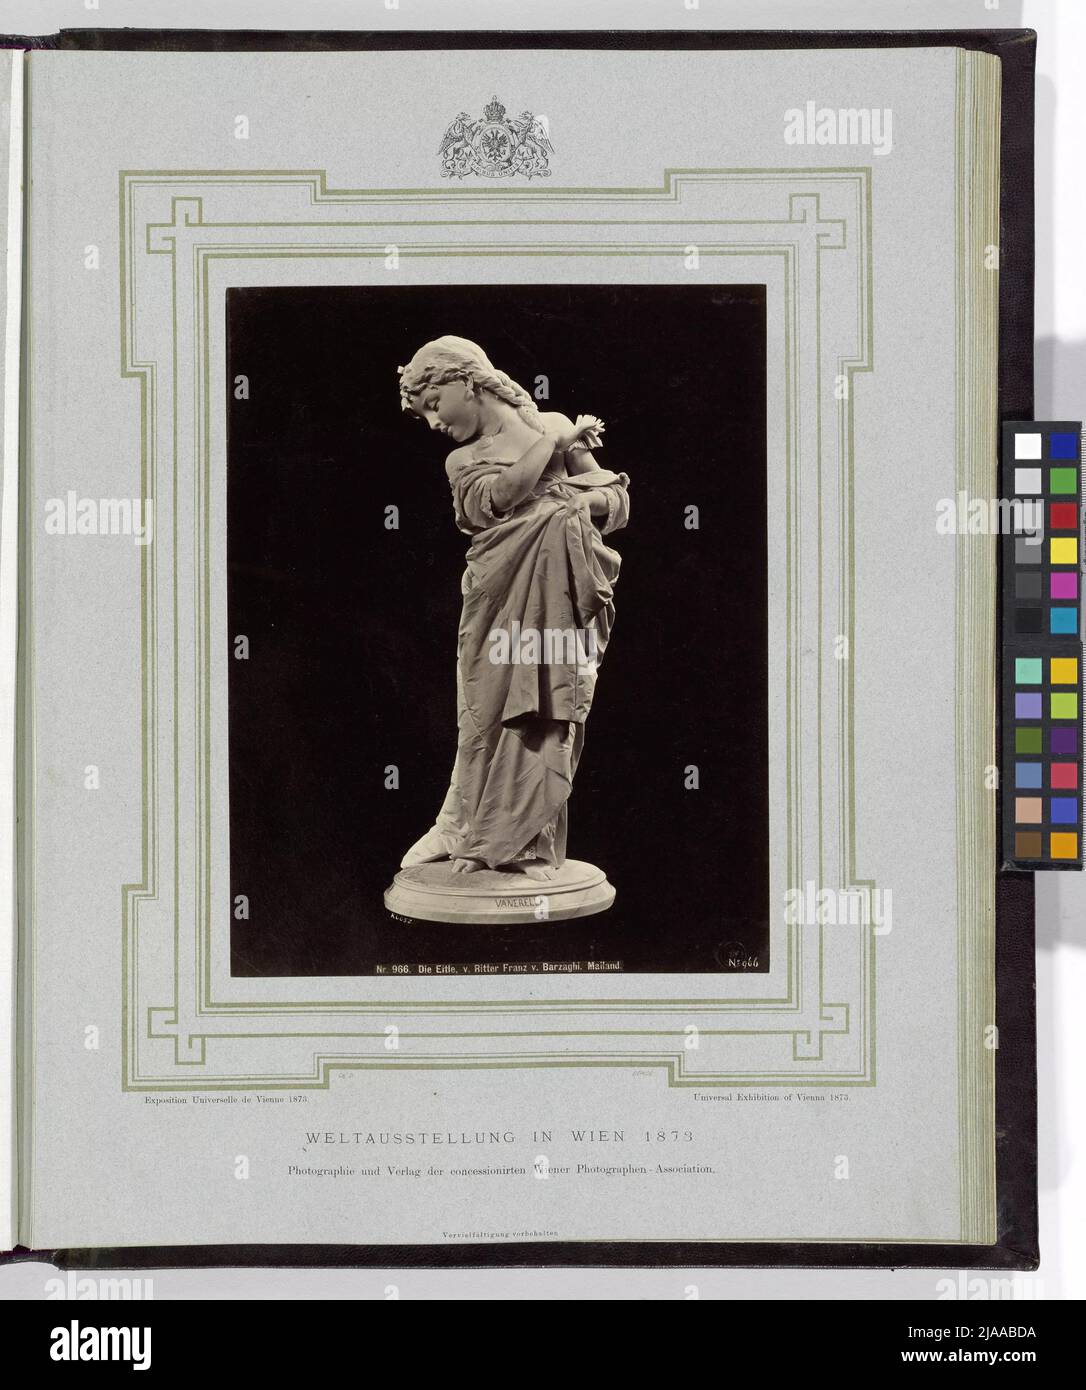 Mostra Mondiale 1873: 'Die Eitle', scultura di Francesco Barzaghi (n. 966). György (Johann Justus Georg) Klösz (Kloess) (1844-1913), fotografo, Associazione Fotografi viennesi, Casa Editoria Foto Stock